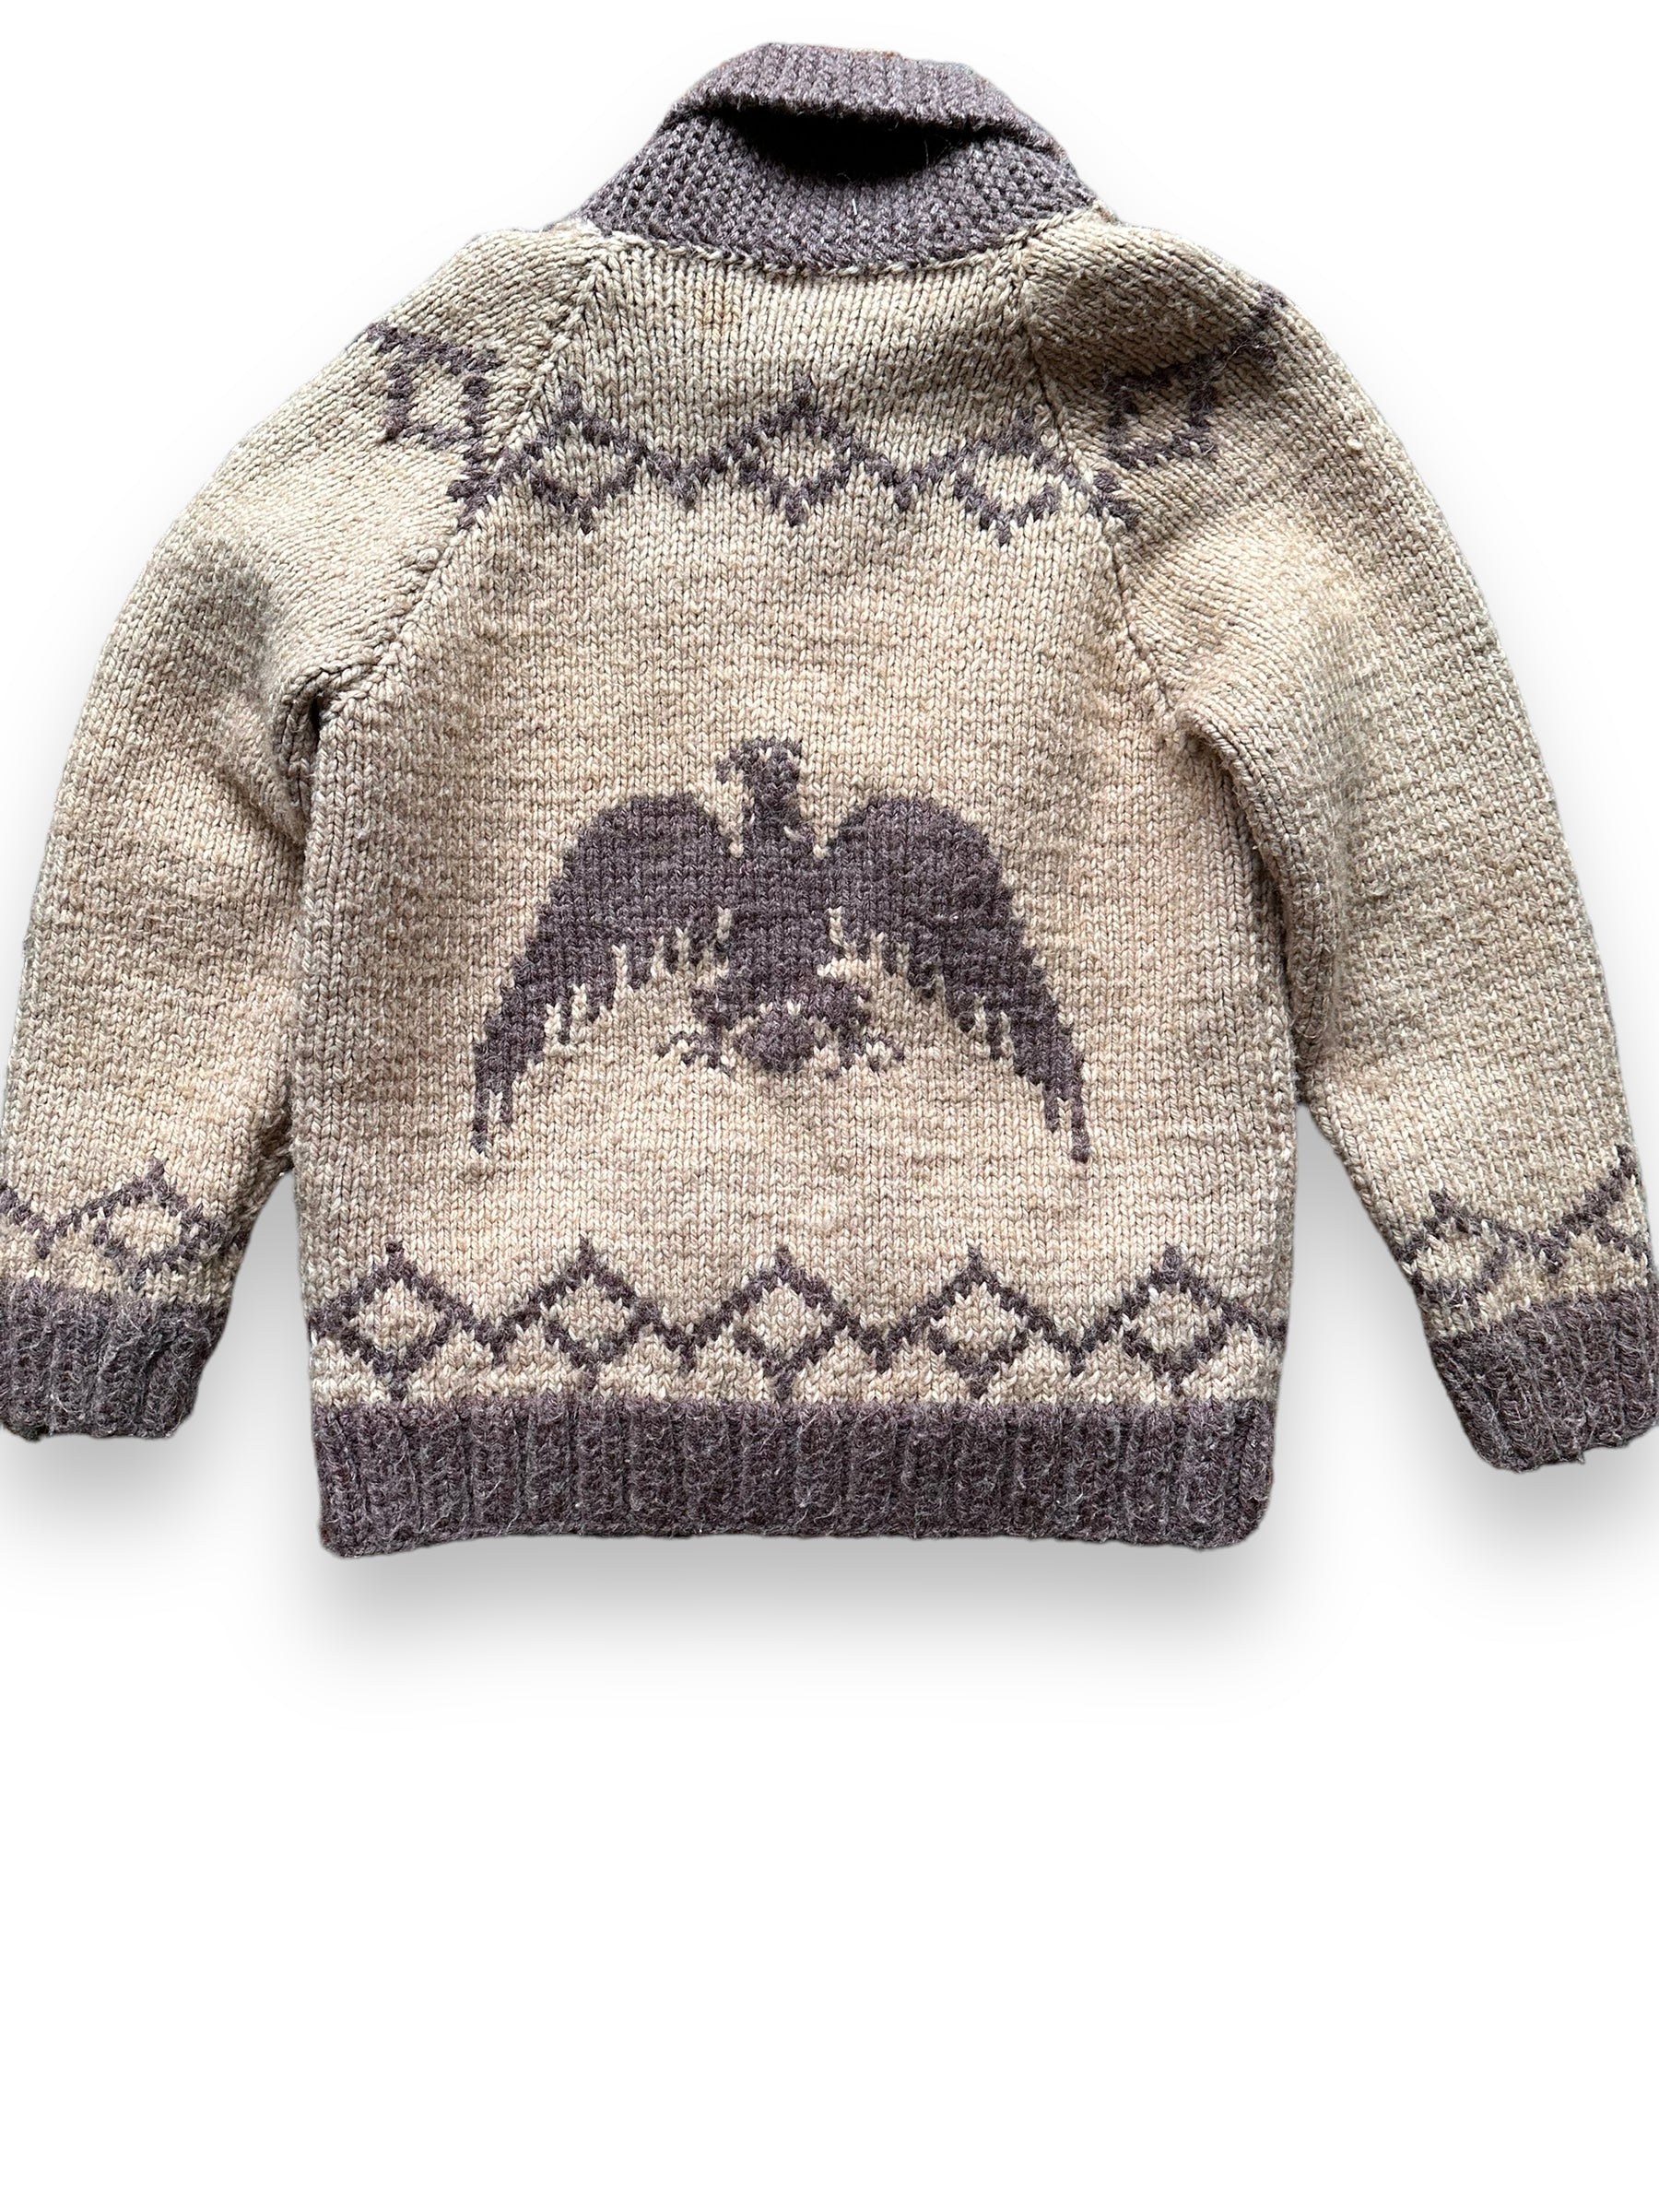 Rear Graphic Detail on Vintage Eagle Cowichan Sweater SZ M | Vintage Cowichan Sweaters Seattle | Barn Owl Vintage Seattle